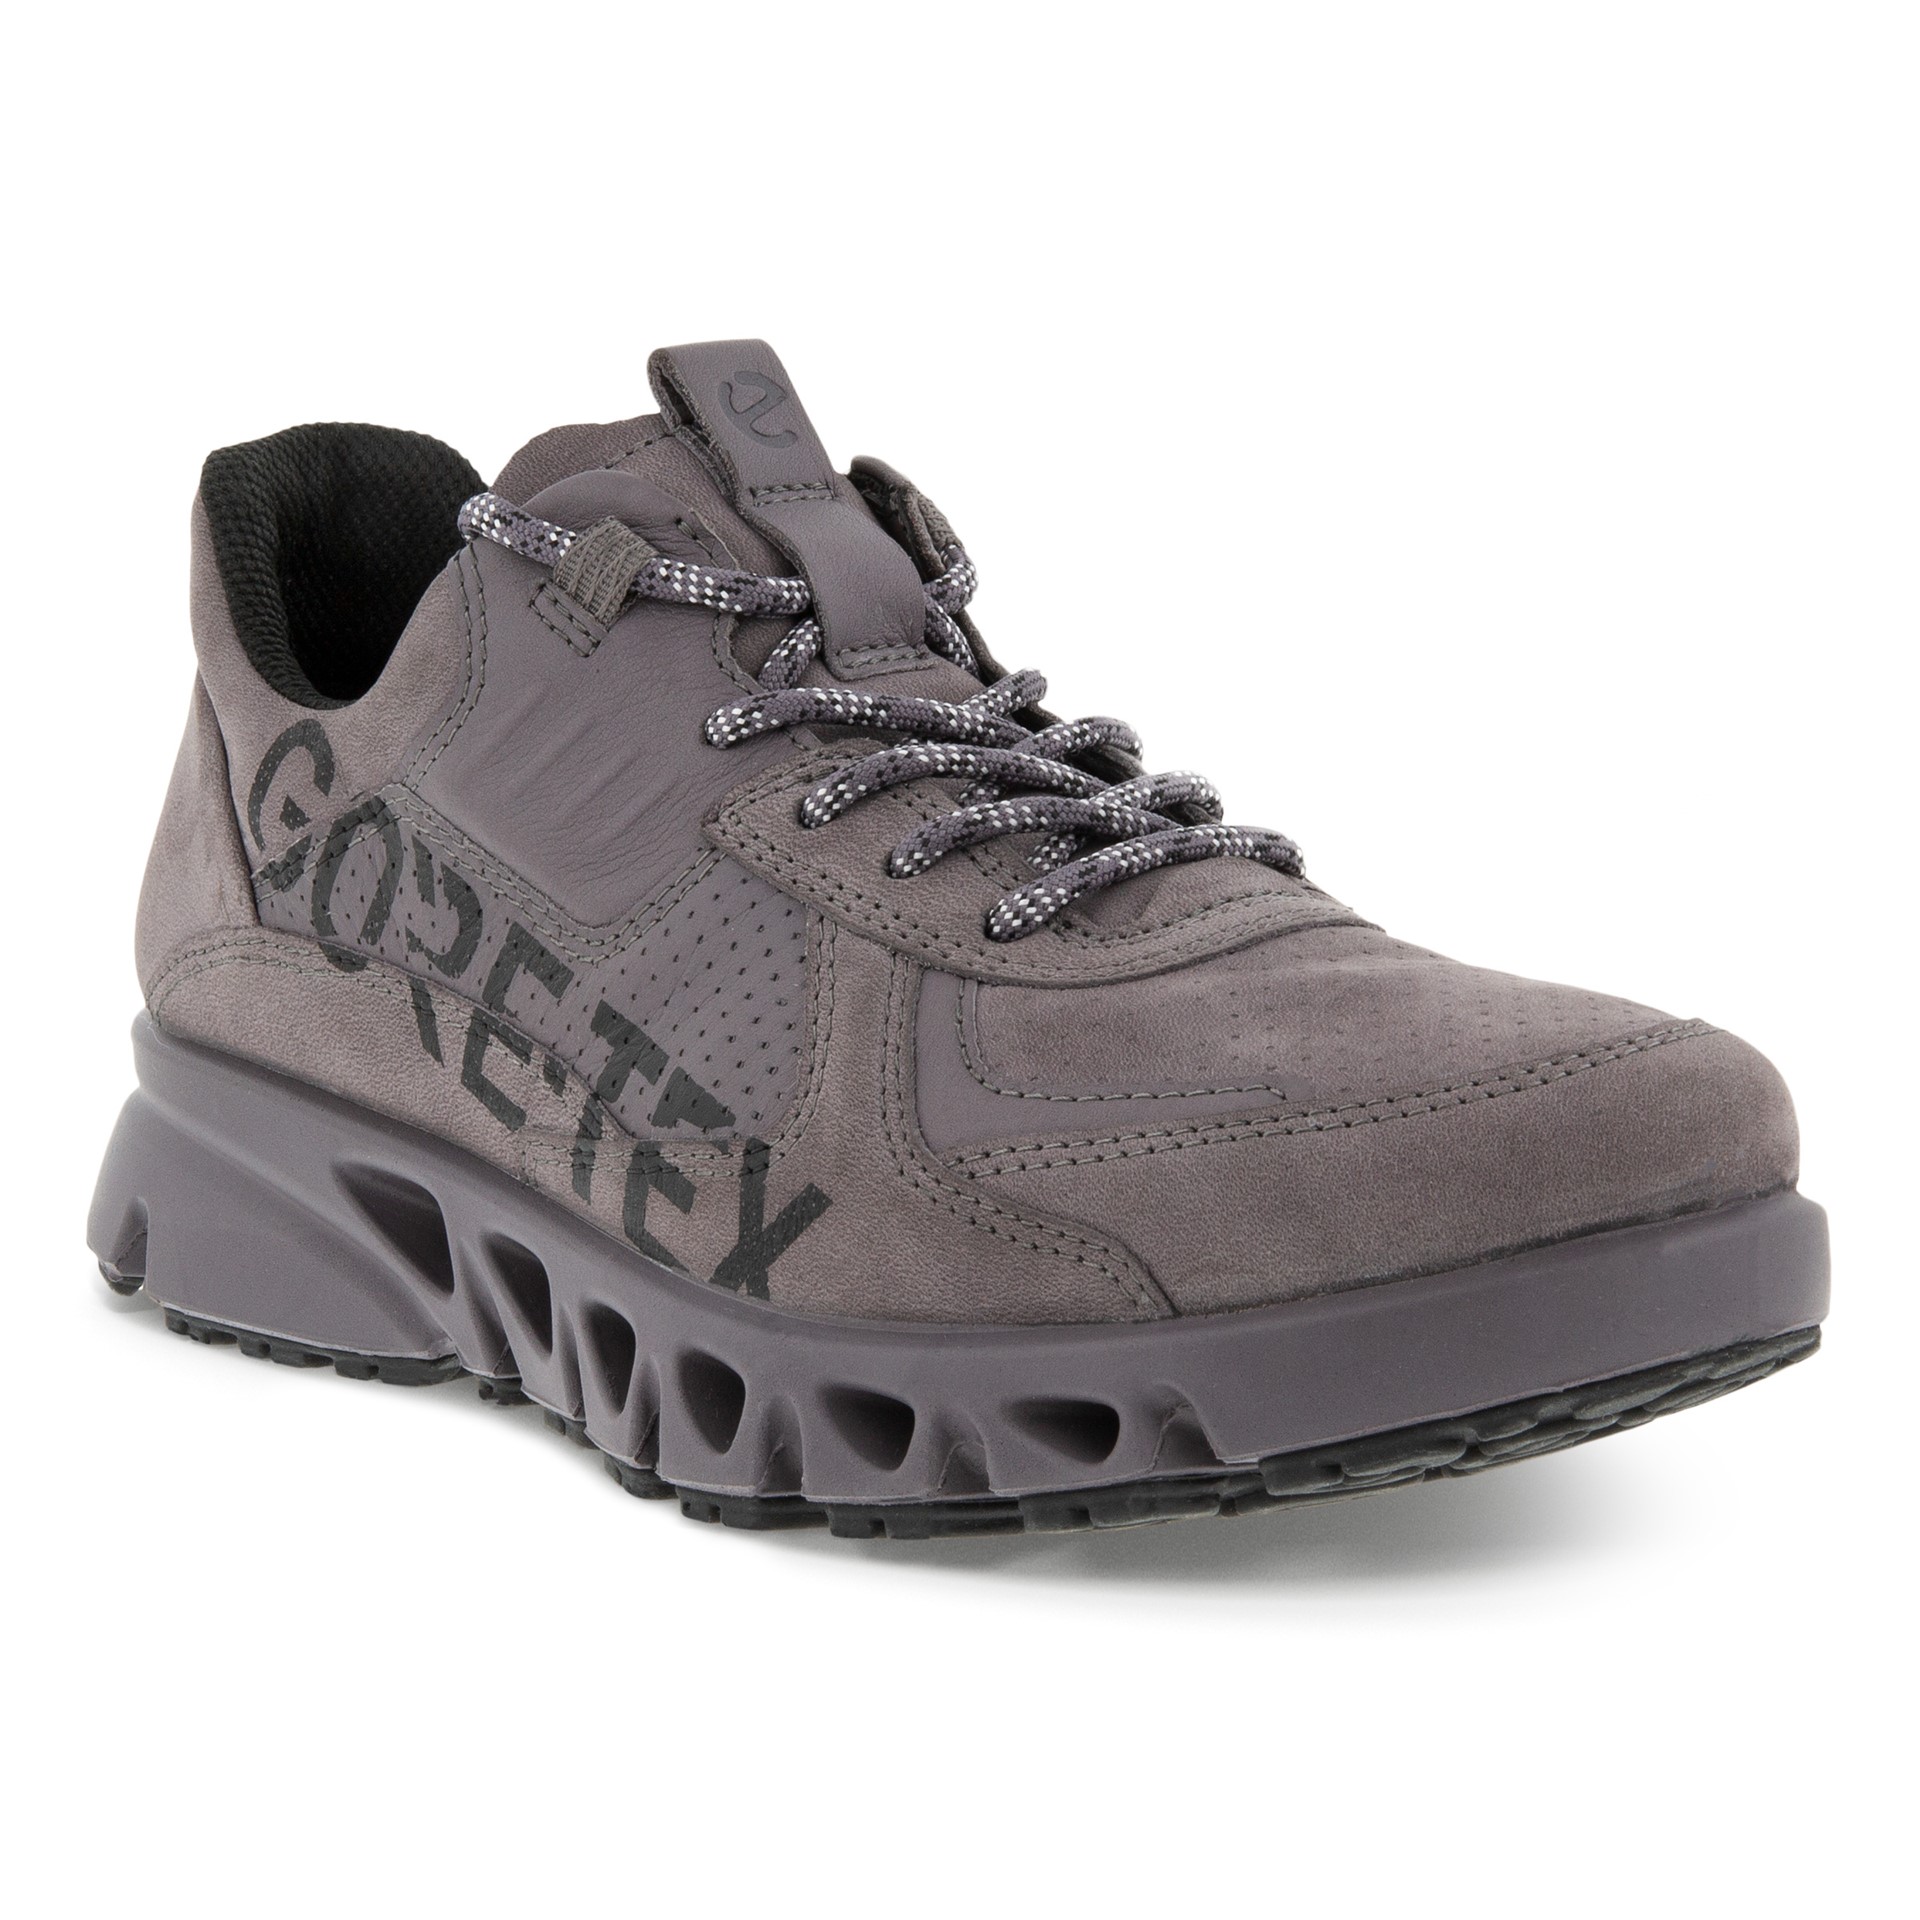 88025302589 Gravity. Fed grå brun sneaker med goretex, super funktionel outdoor sko.